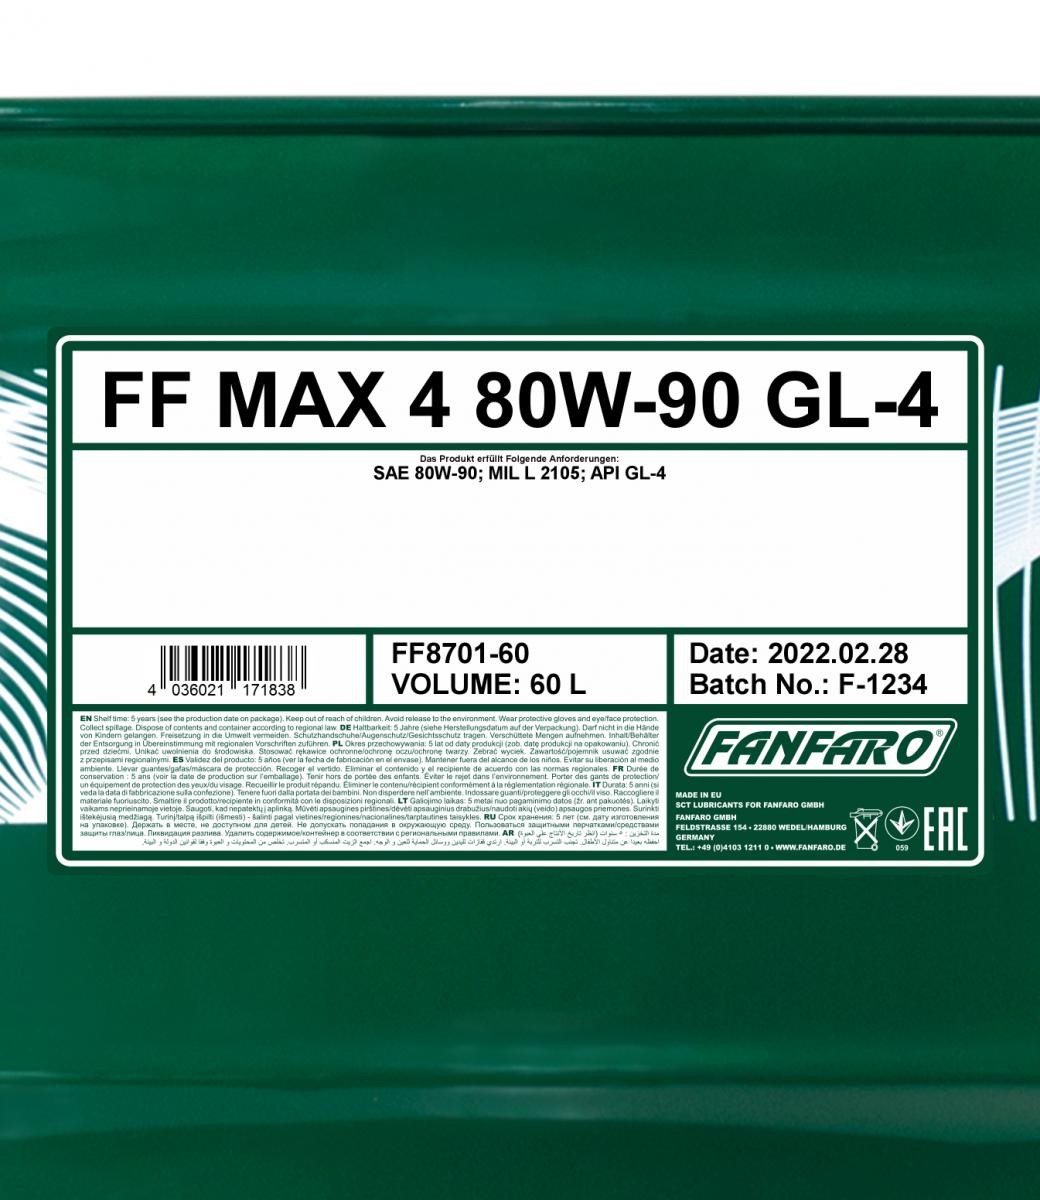 FANFARO Transmission oil FF8701-60